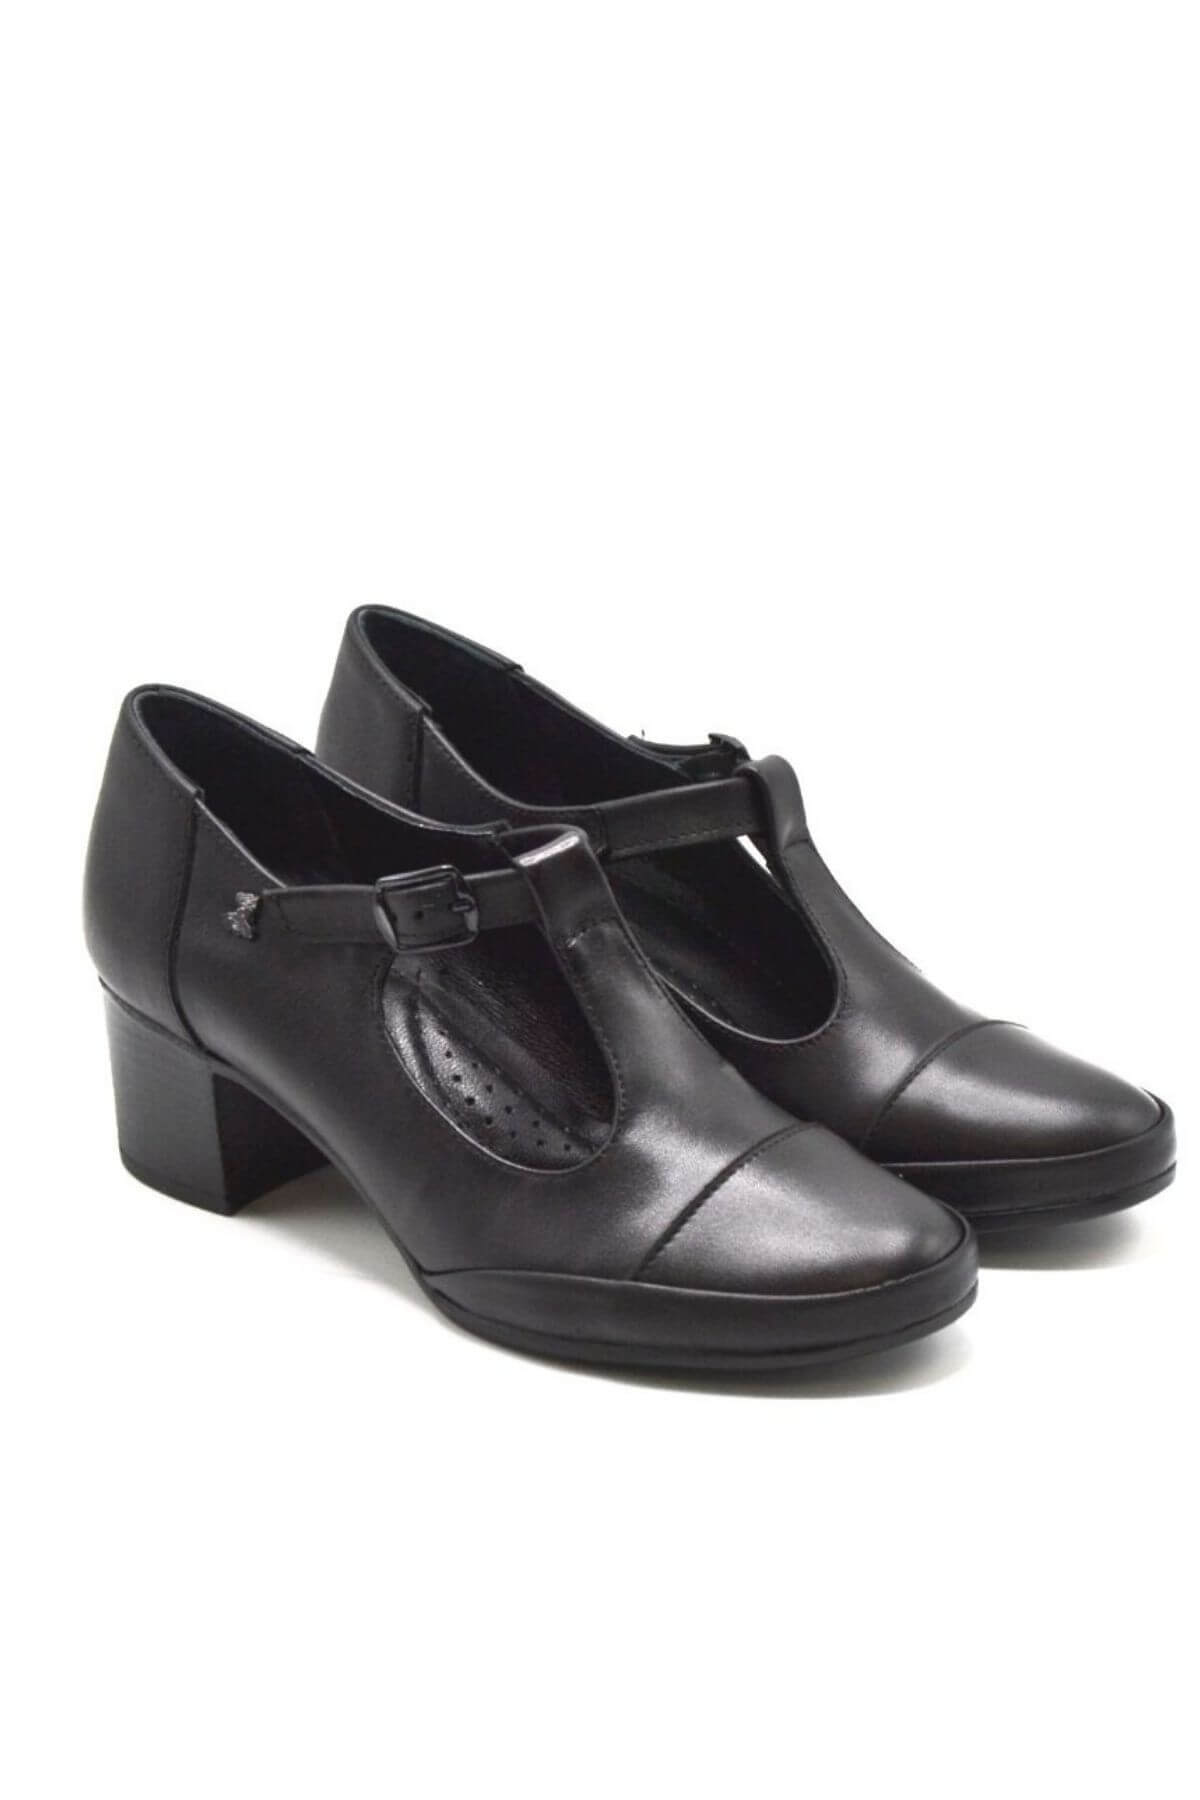 Kadın Topuklu Deri Ayakkabı Siyah 1911954K - Thumbnail